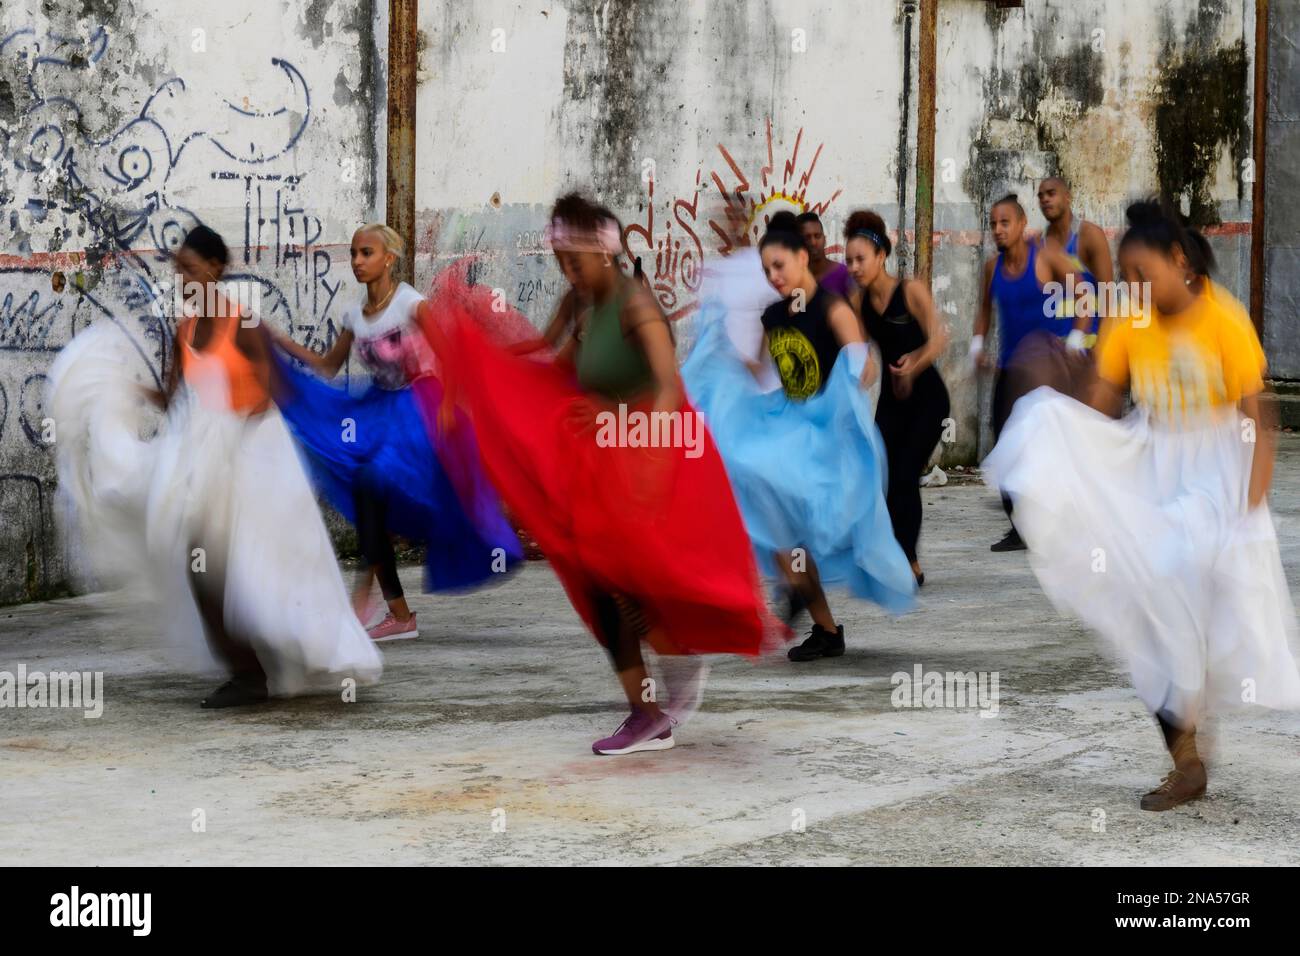 Young Cuban women dancing in an old concrete building with graffiti on the walls; Havana, Cuba Stock Photo